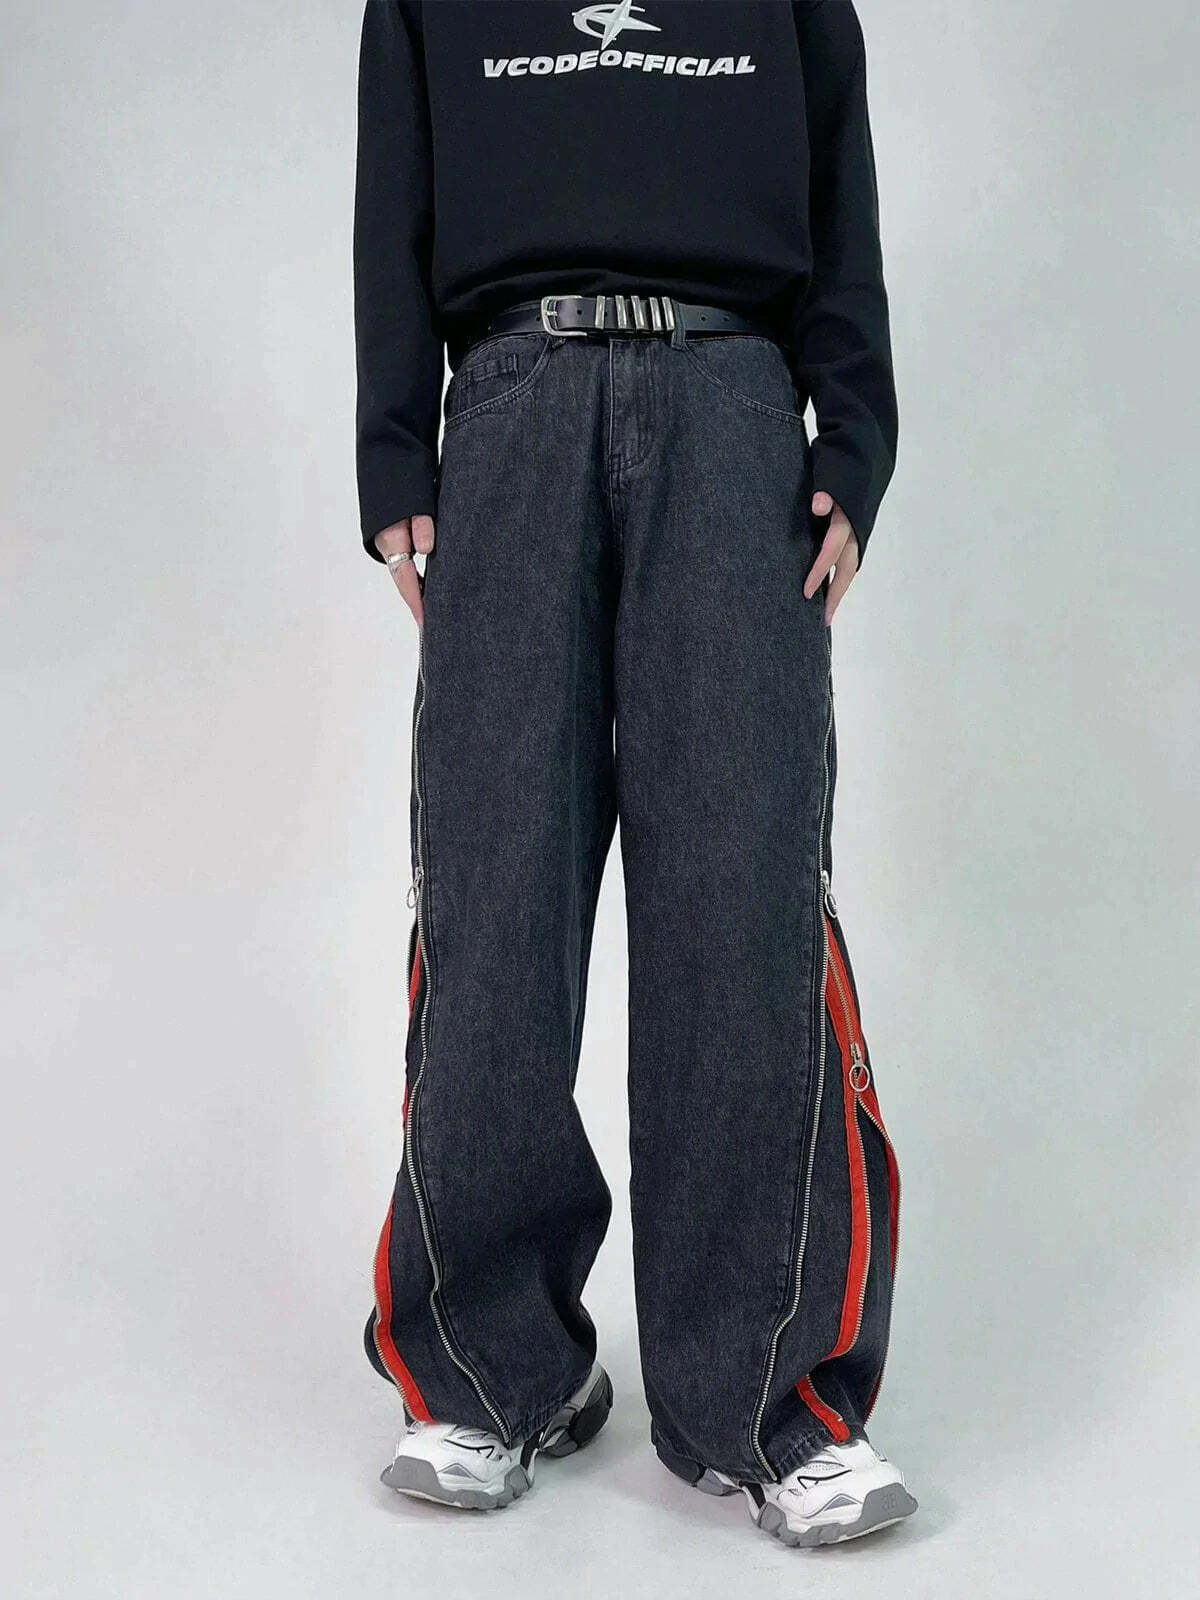 retro stripe zipup jeans edgy & vibrant streetwear 6842